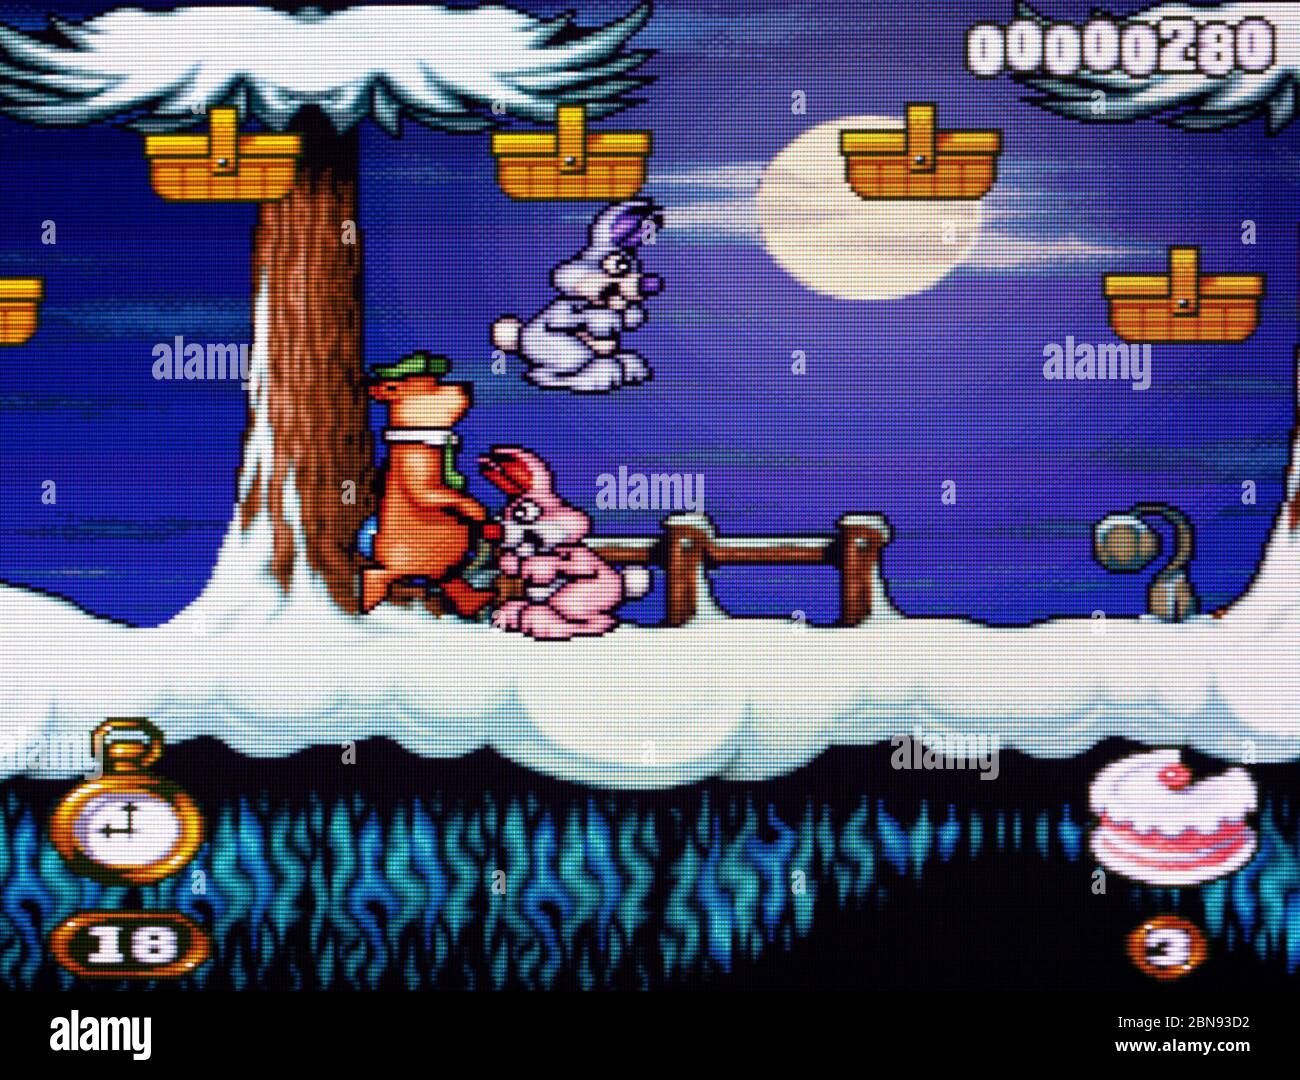 The Adventures of Yogi Bear - SNES Super Nintendo - Editorial use only  Stock Photo - Alamy